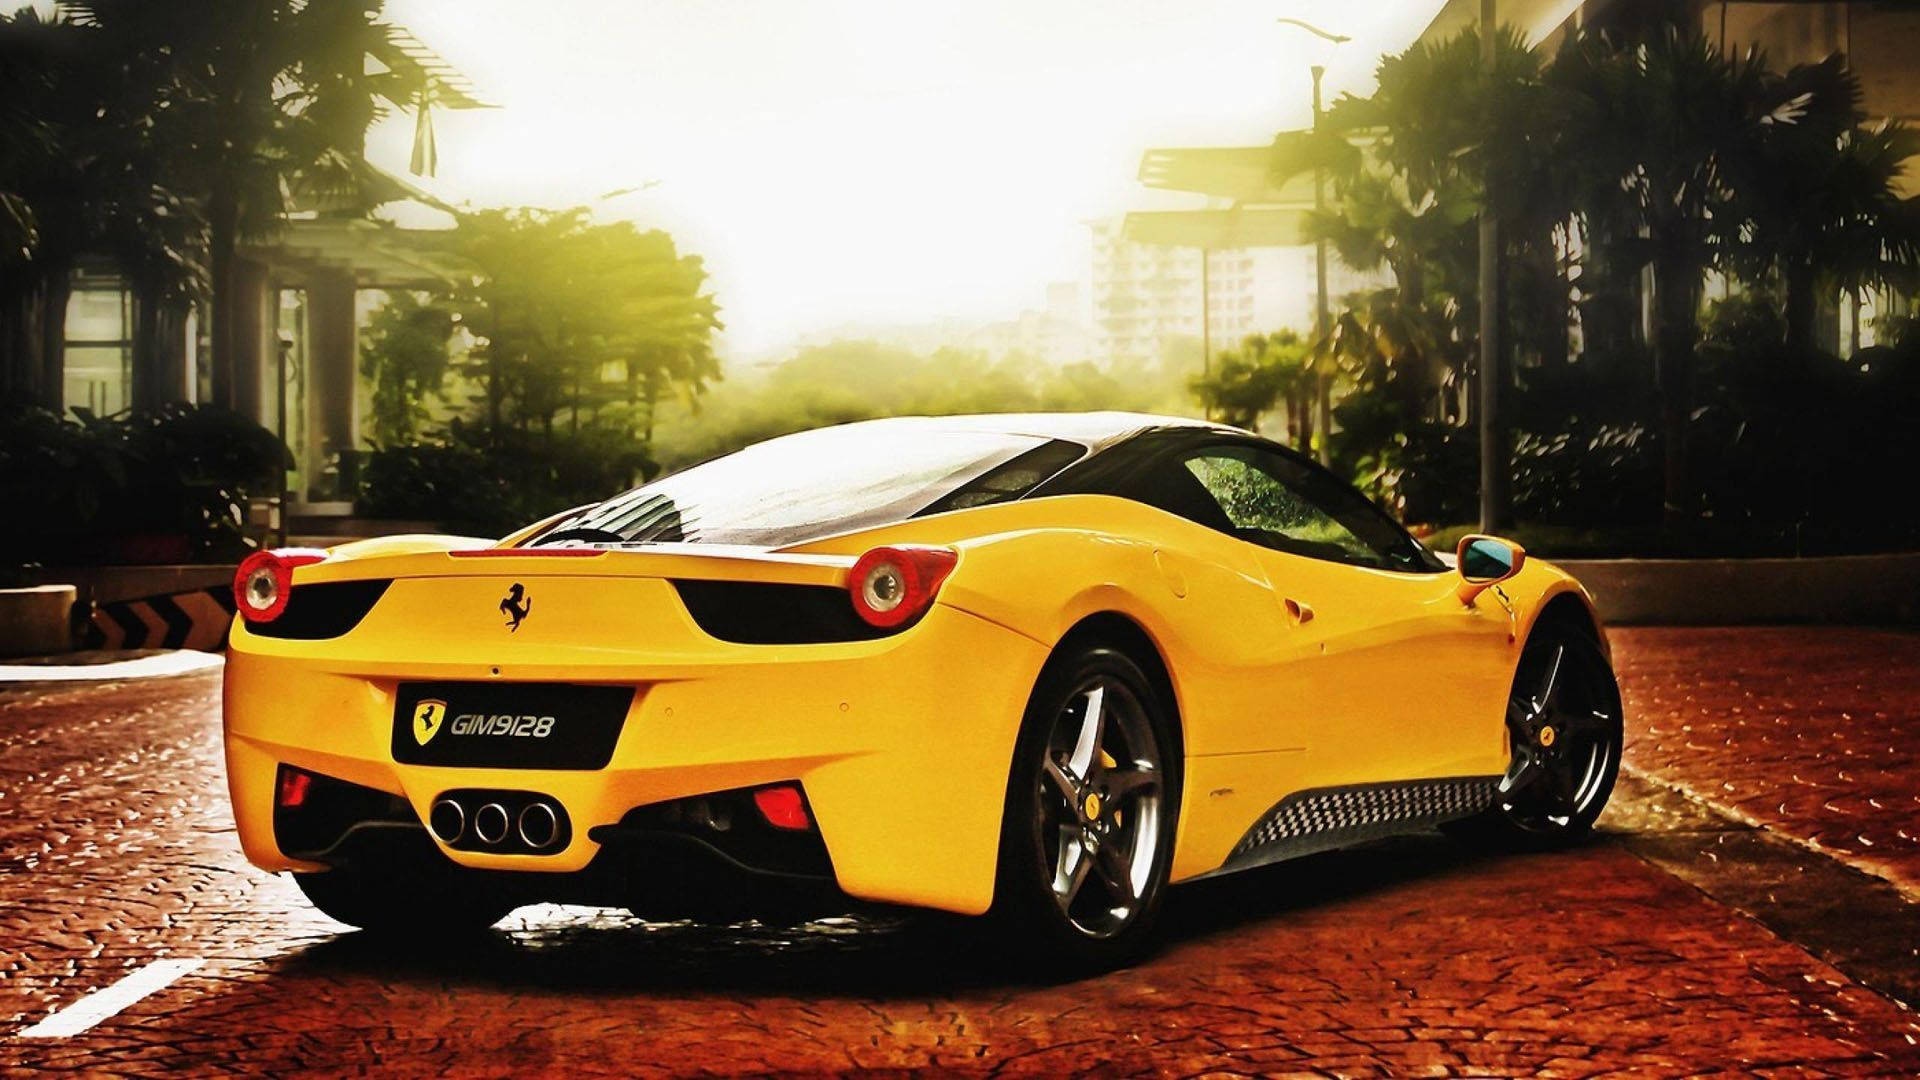 Hot Yellow 1920x1080 Ferrari 458 Background